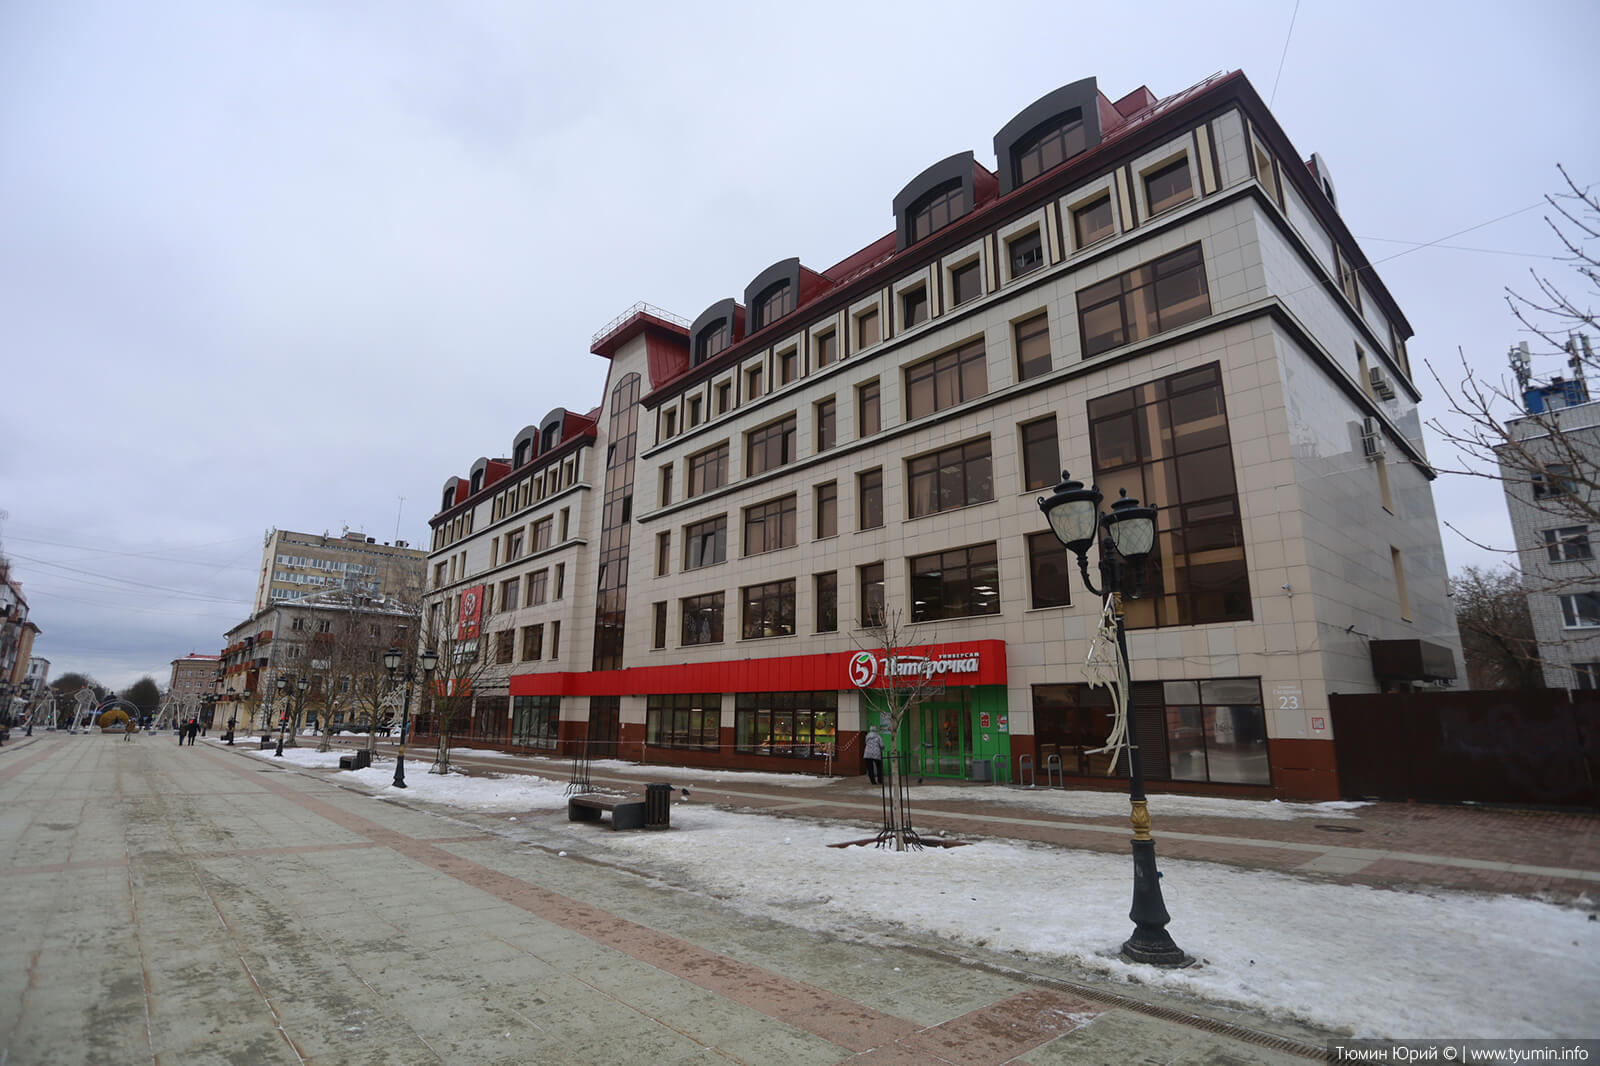 Walk in Bryansk - Longpost, Bryansk, Architecture, Travels, The photo, My